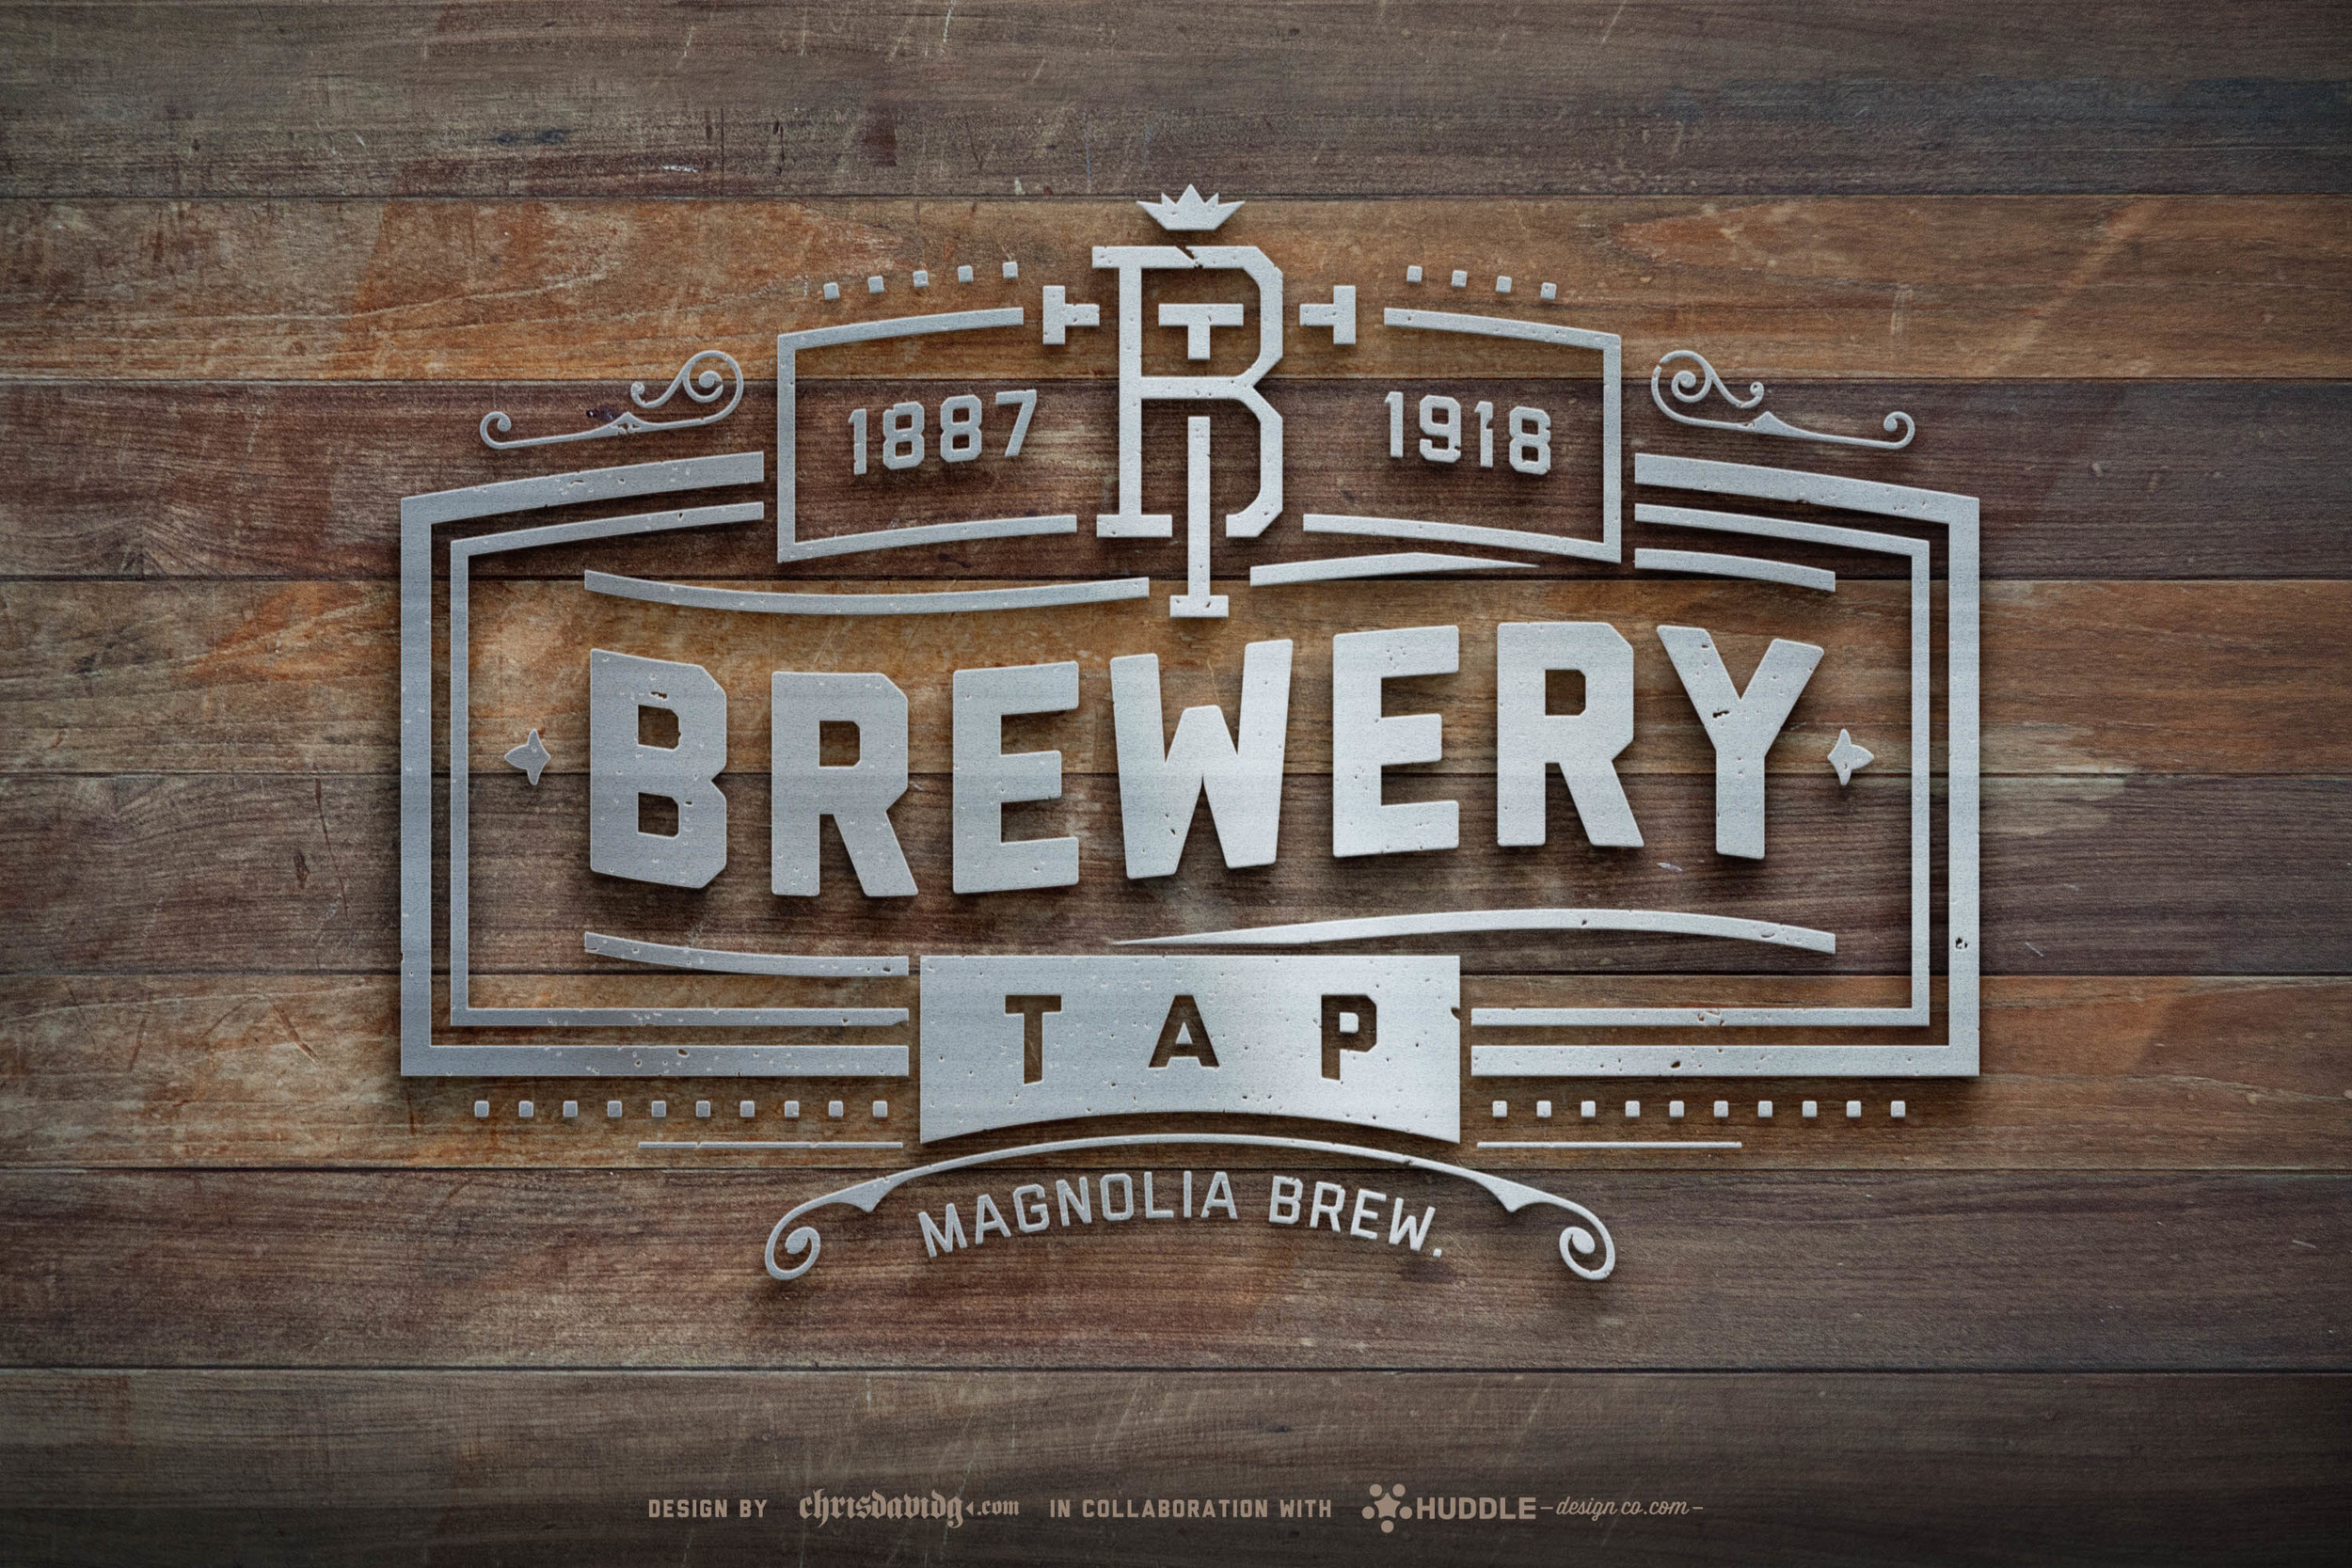 chrisdavidg-brewerytap-logo-1-proof3.jpg